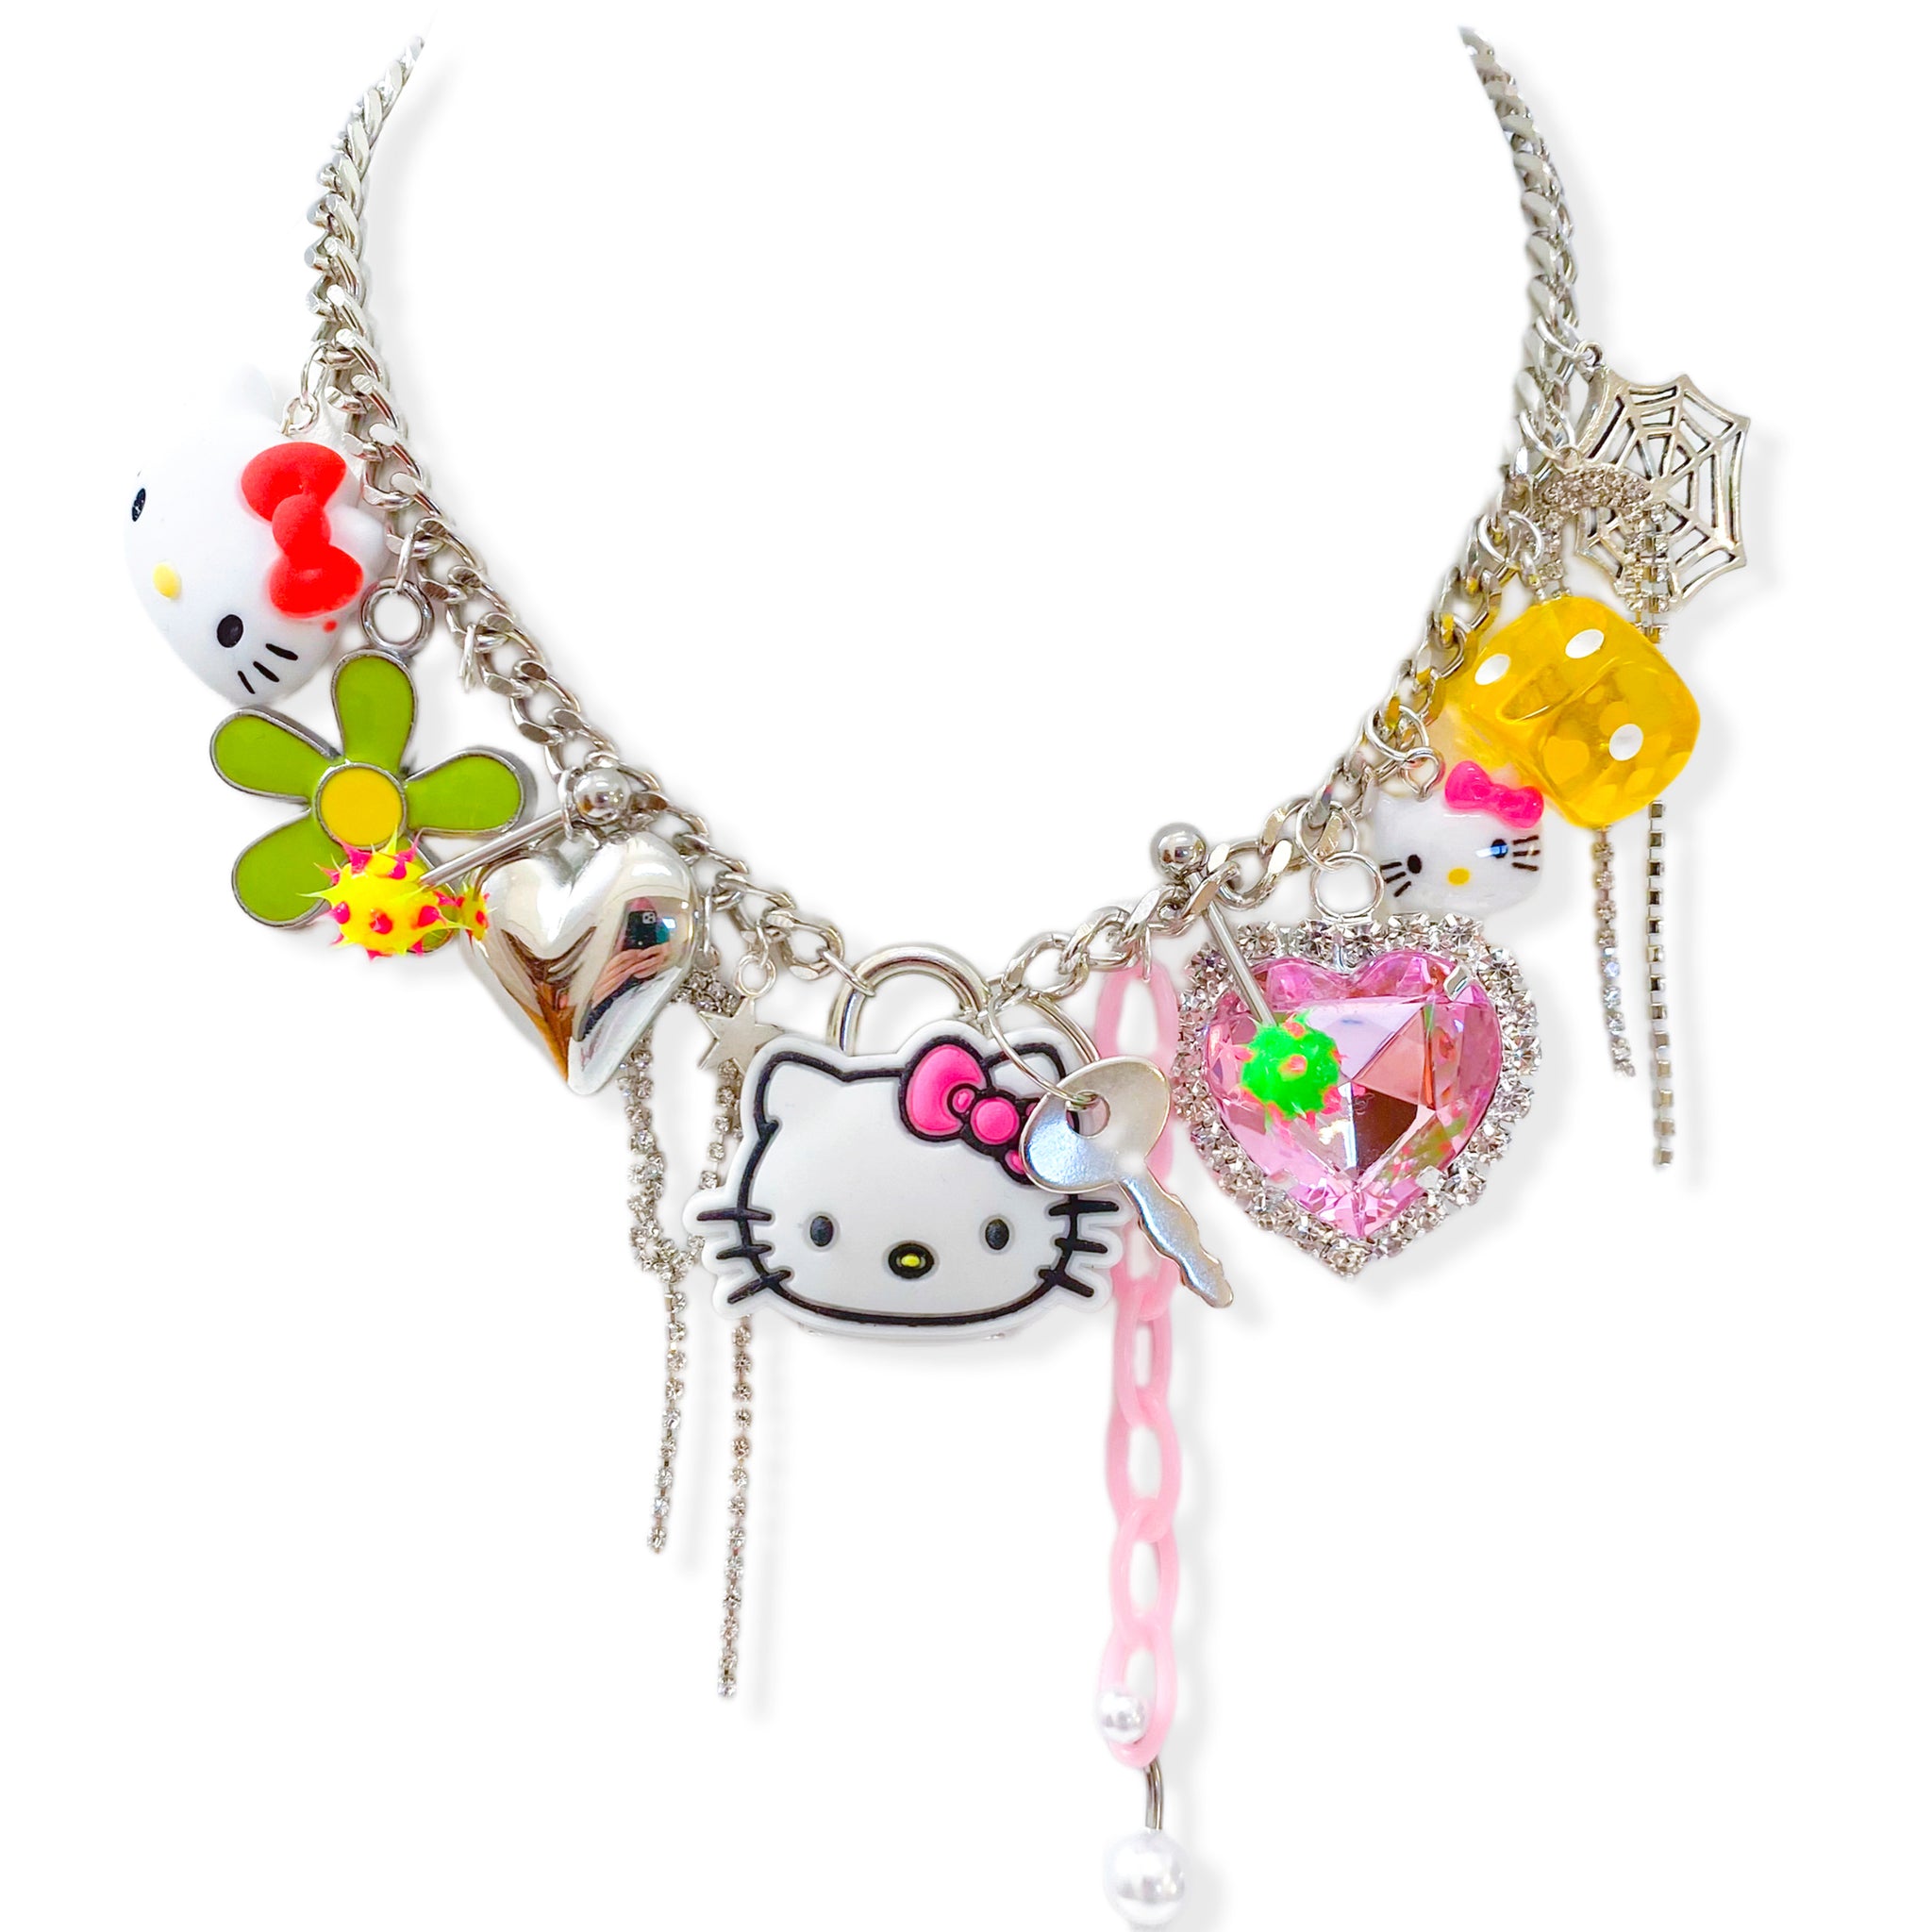 Laser Kitten Bedazzled Tamagotchi Charm Necklace